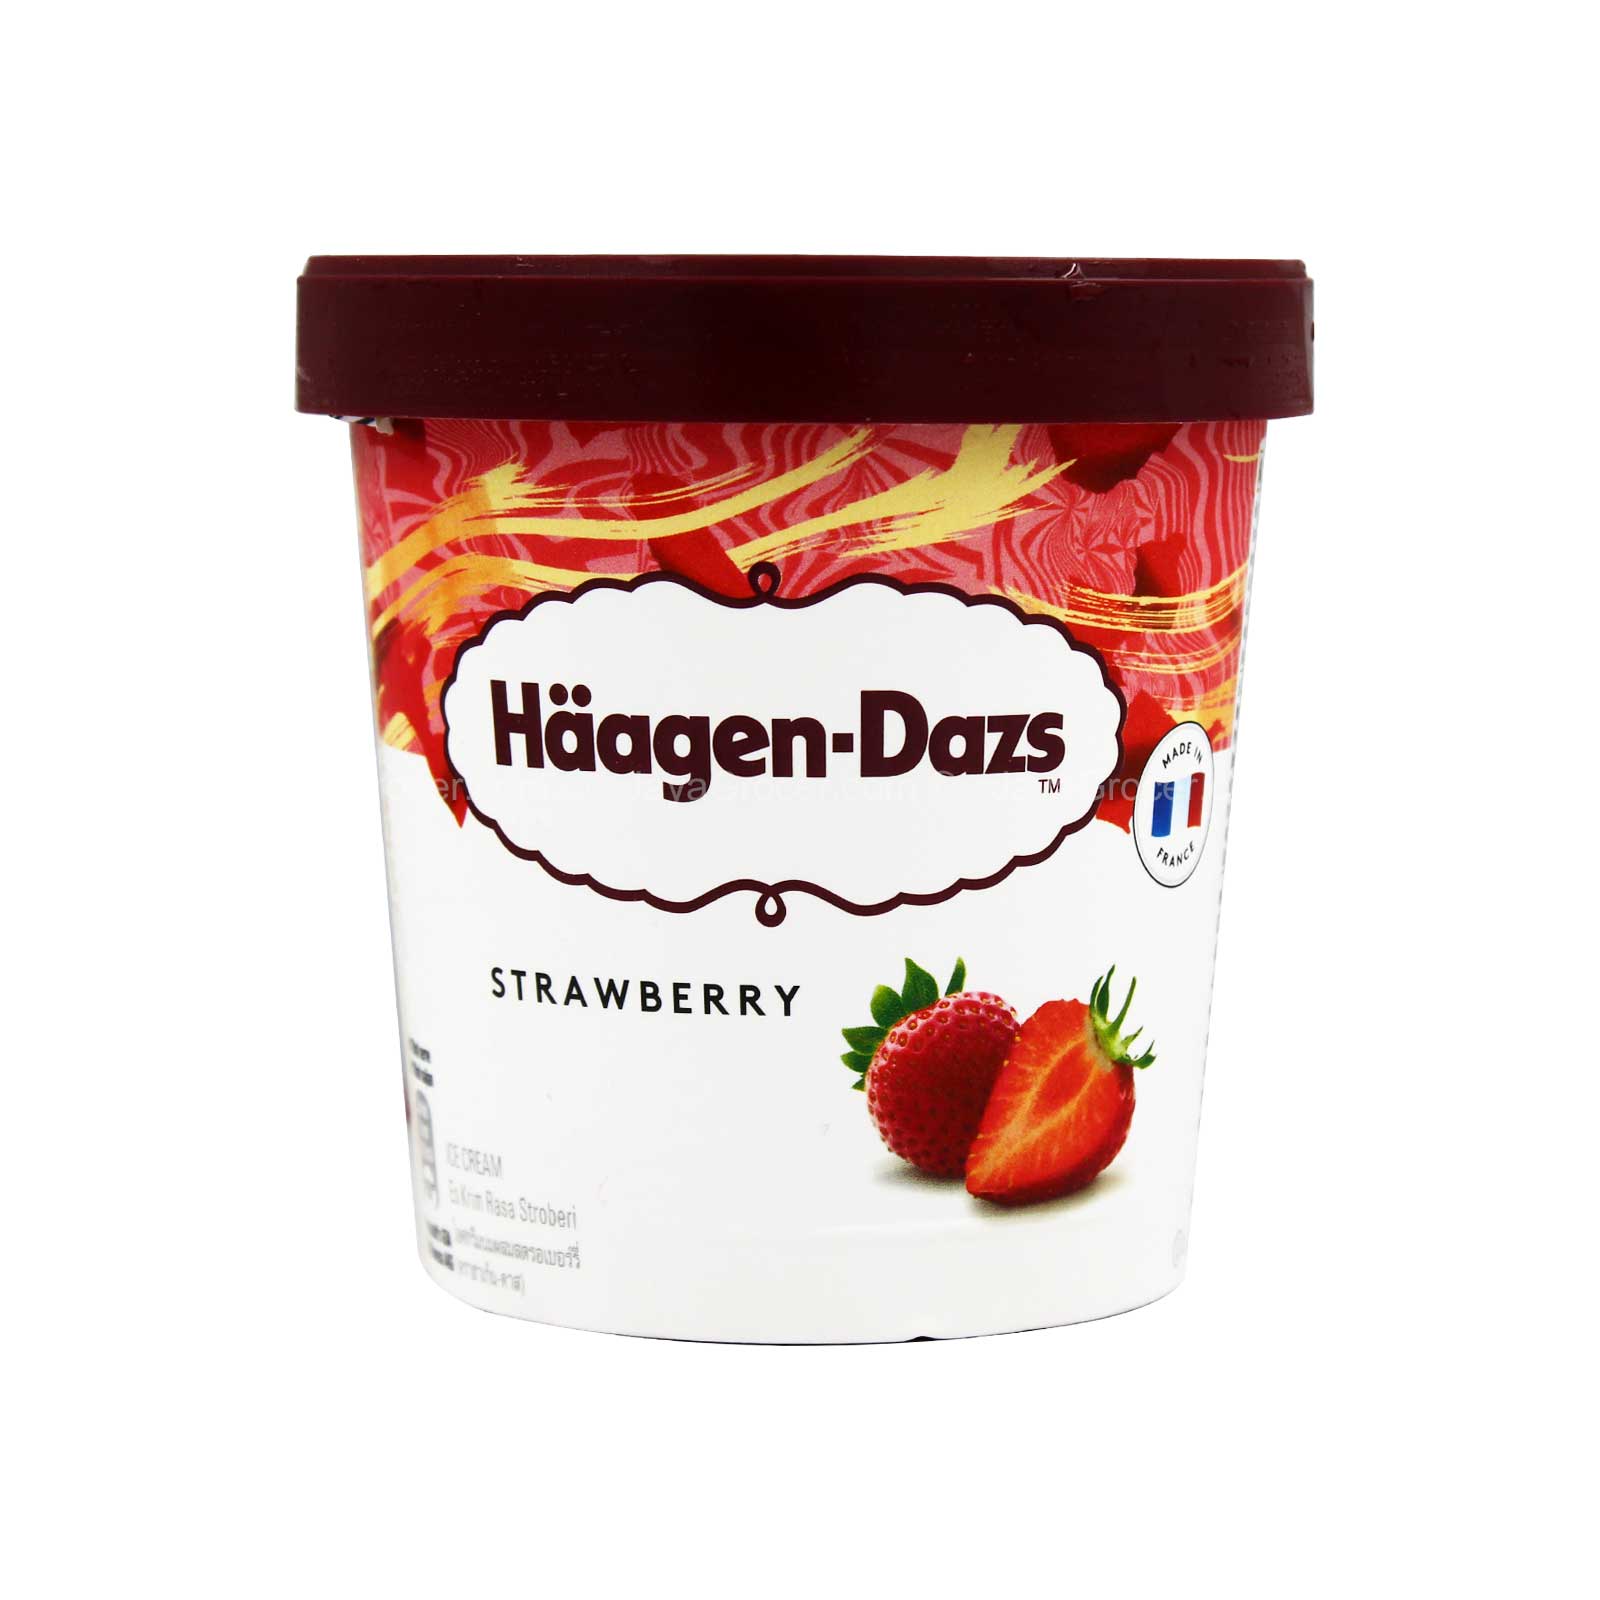 HAAGEN DAZ STRAWBERRY CHEESECAKE ICE CREAM PINT